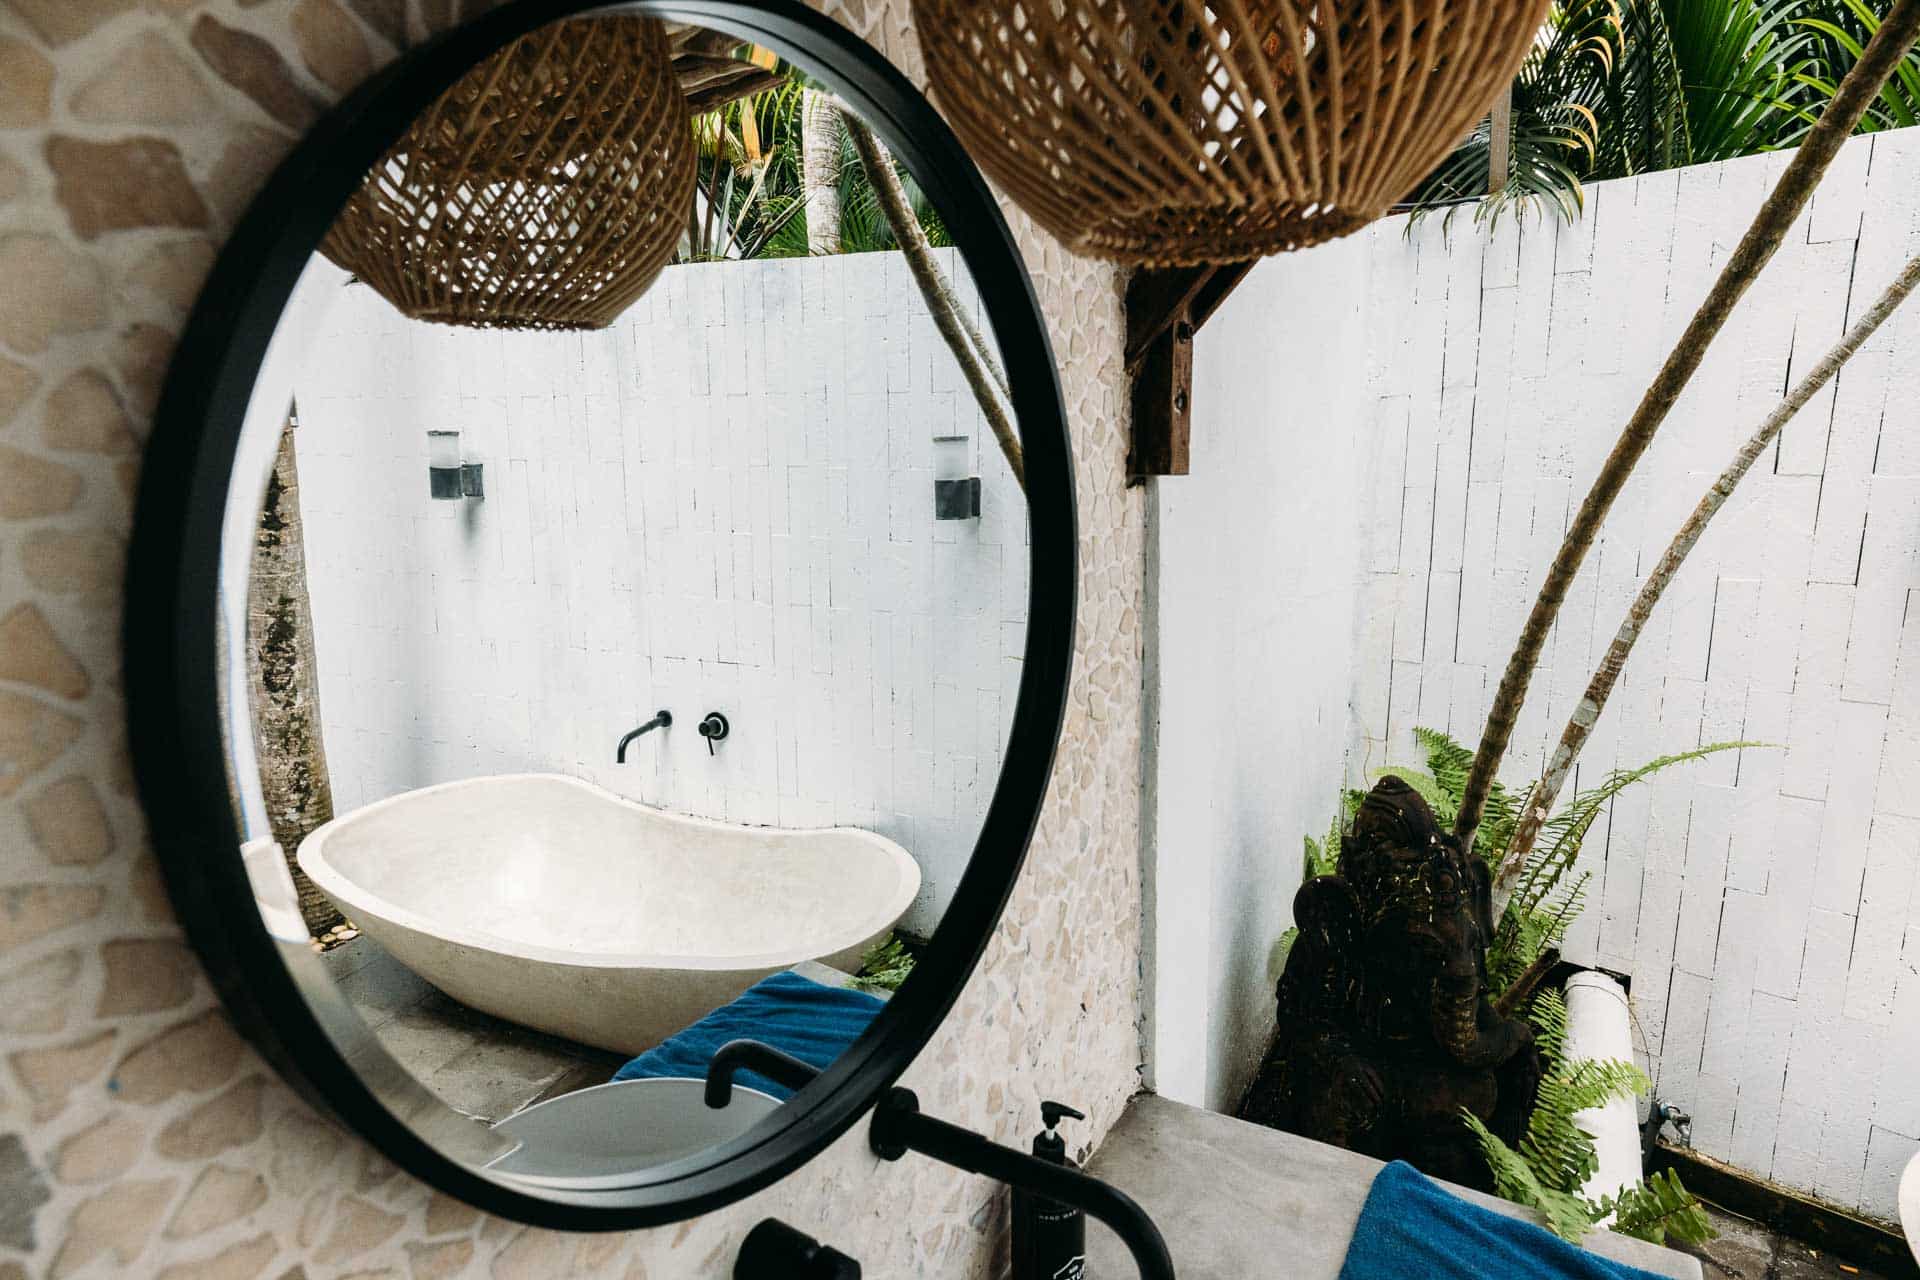 An outside bathroom with bathtub view in mirror